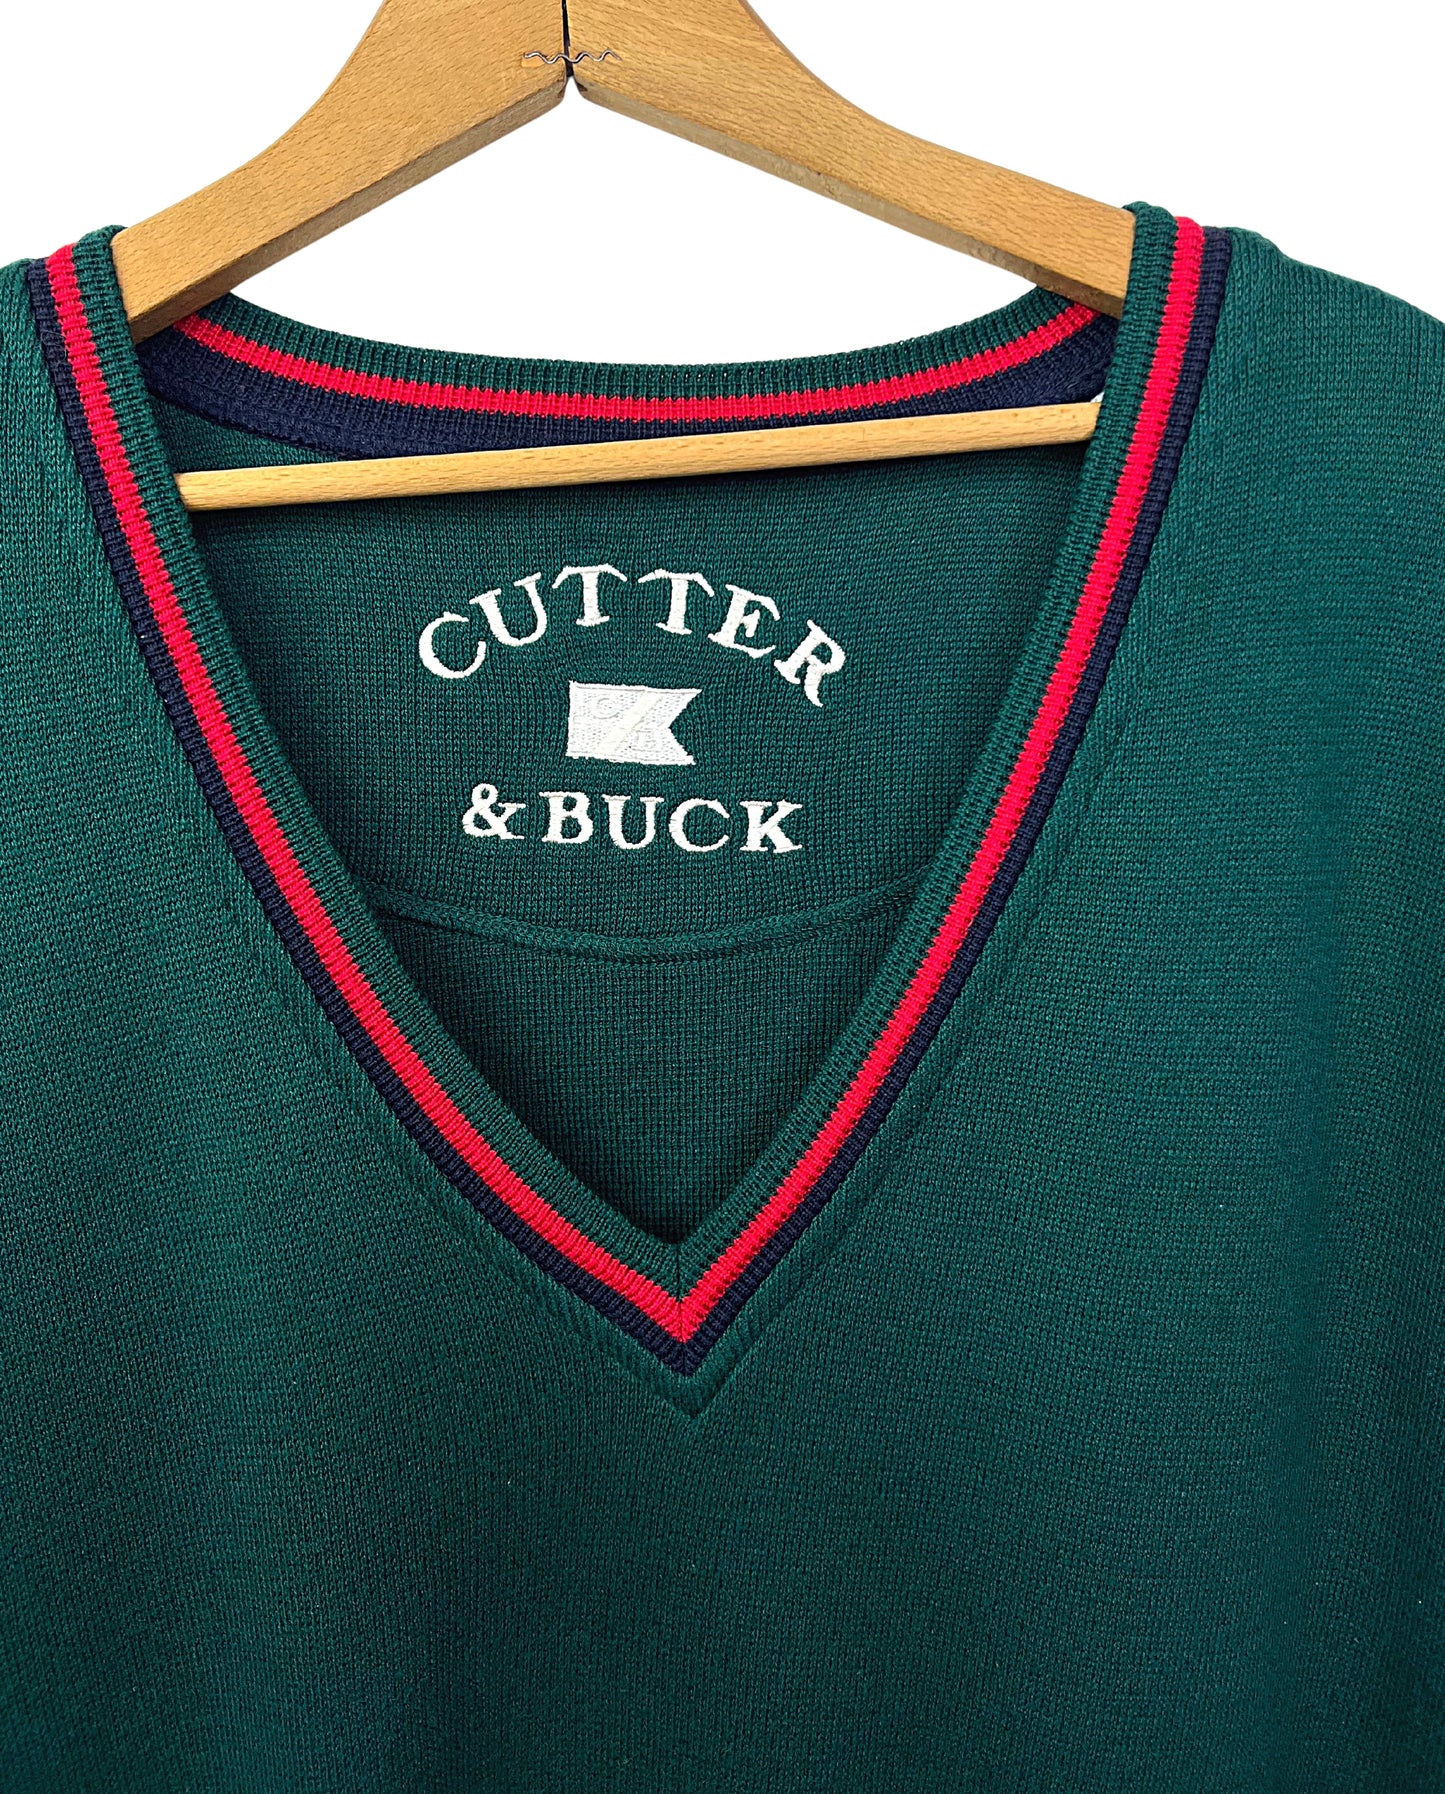 90’s Forest Green Striped Preppy V-Neck Sweater Vest Size 1X/2X